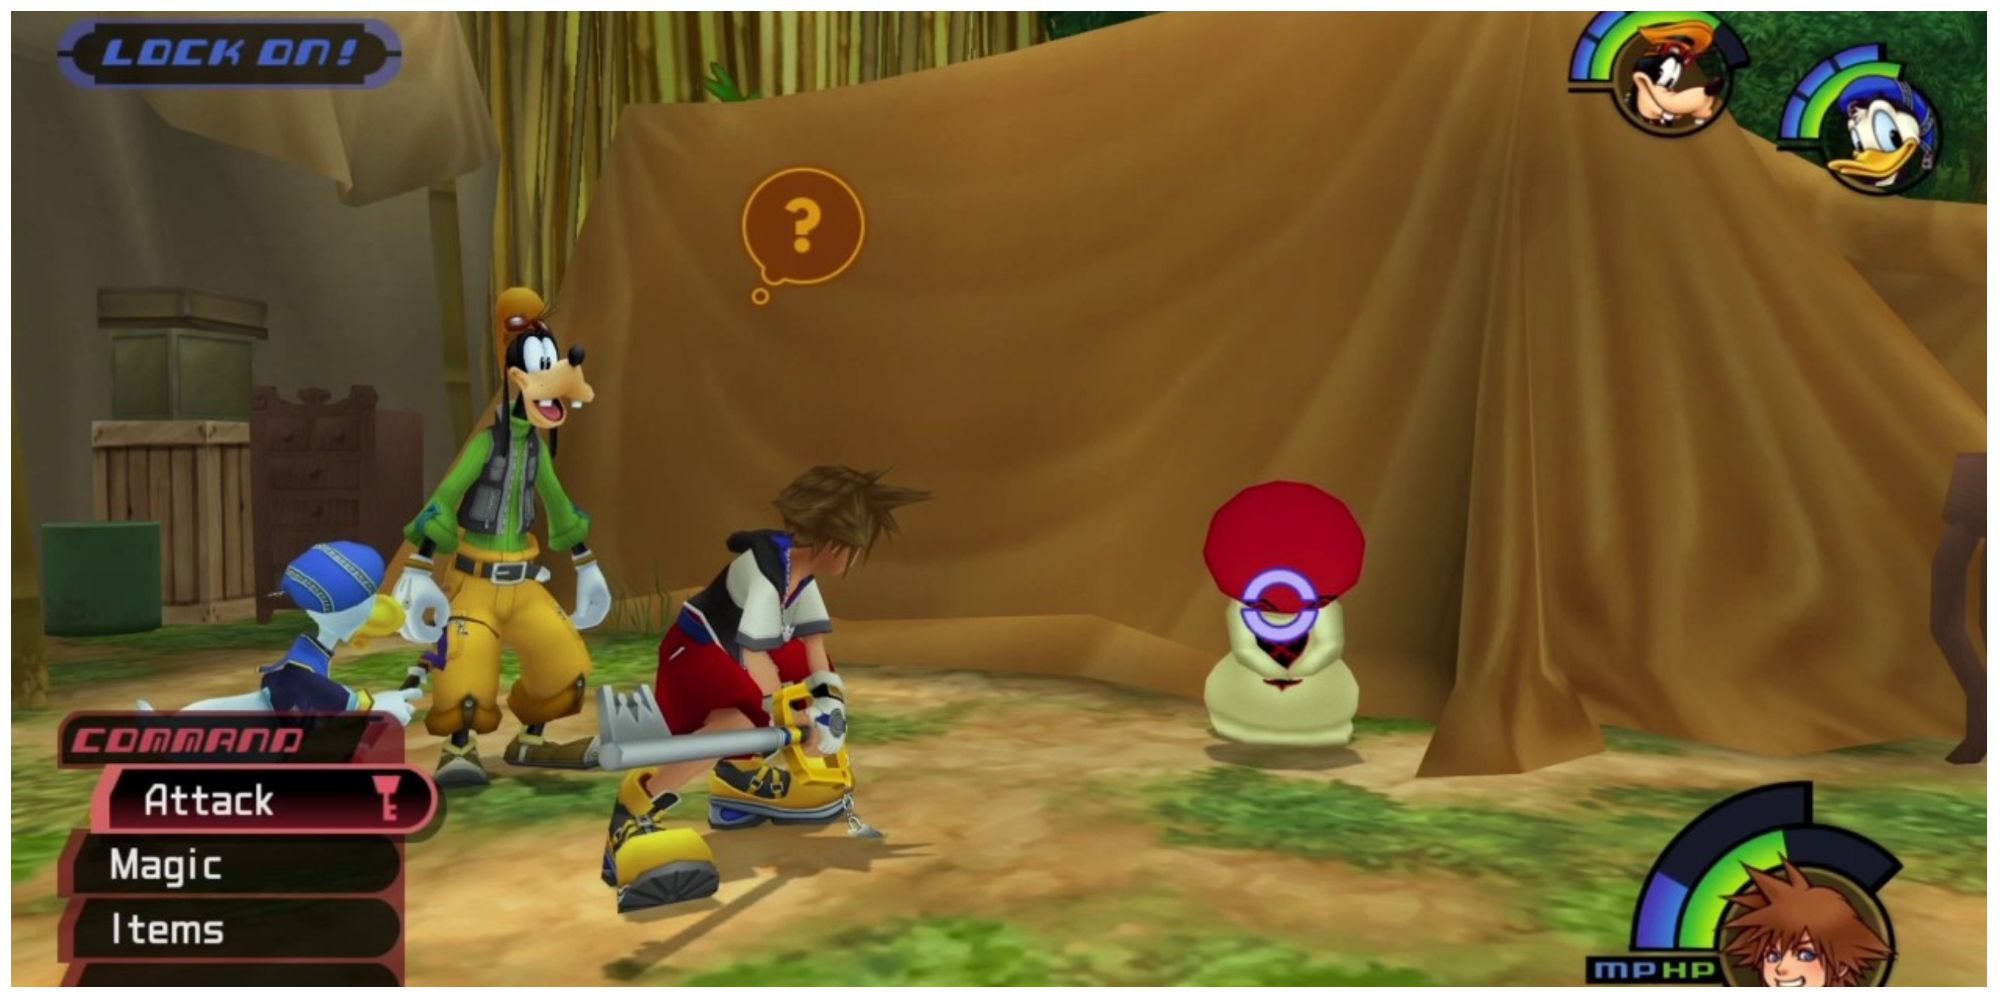 Sora, Donald, and Goofy face a White Mushroom in Kingdom Hearts 1